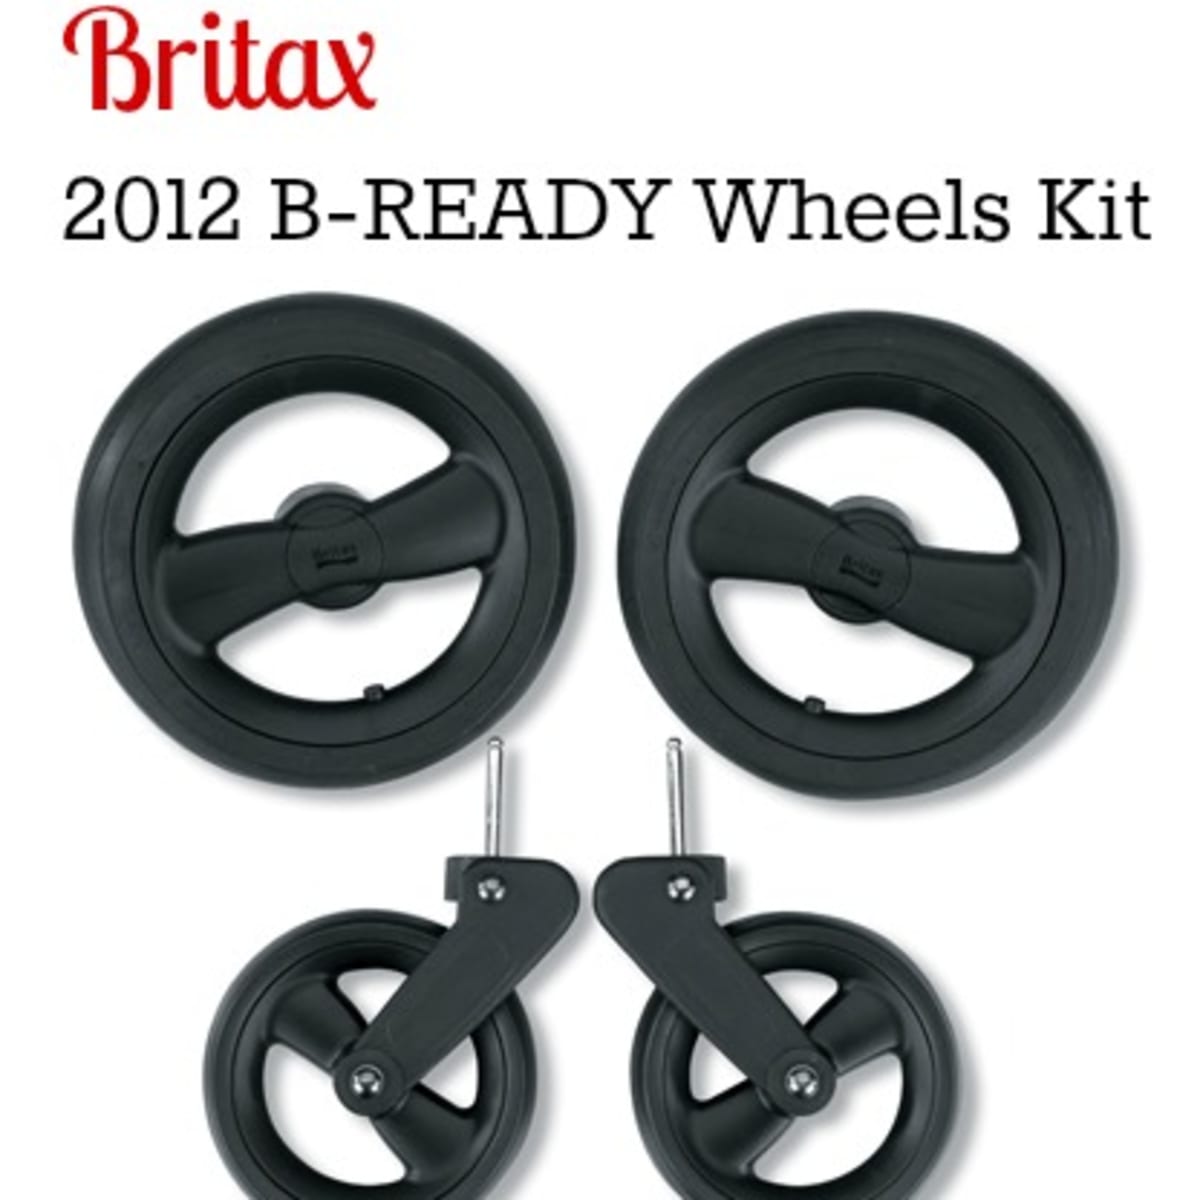 britax b ready wheels